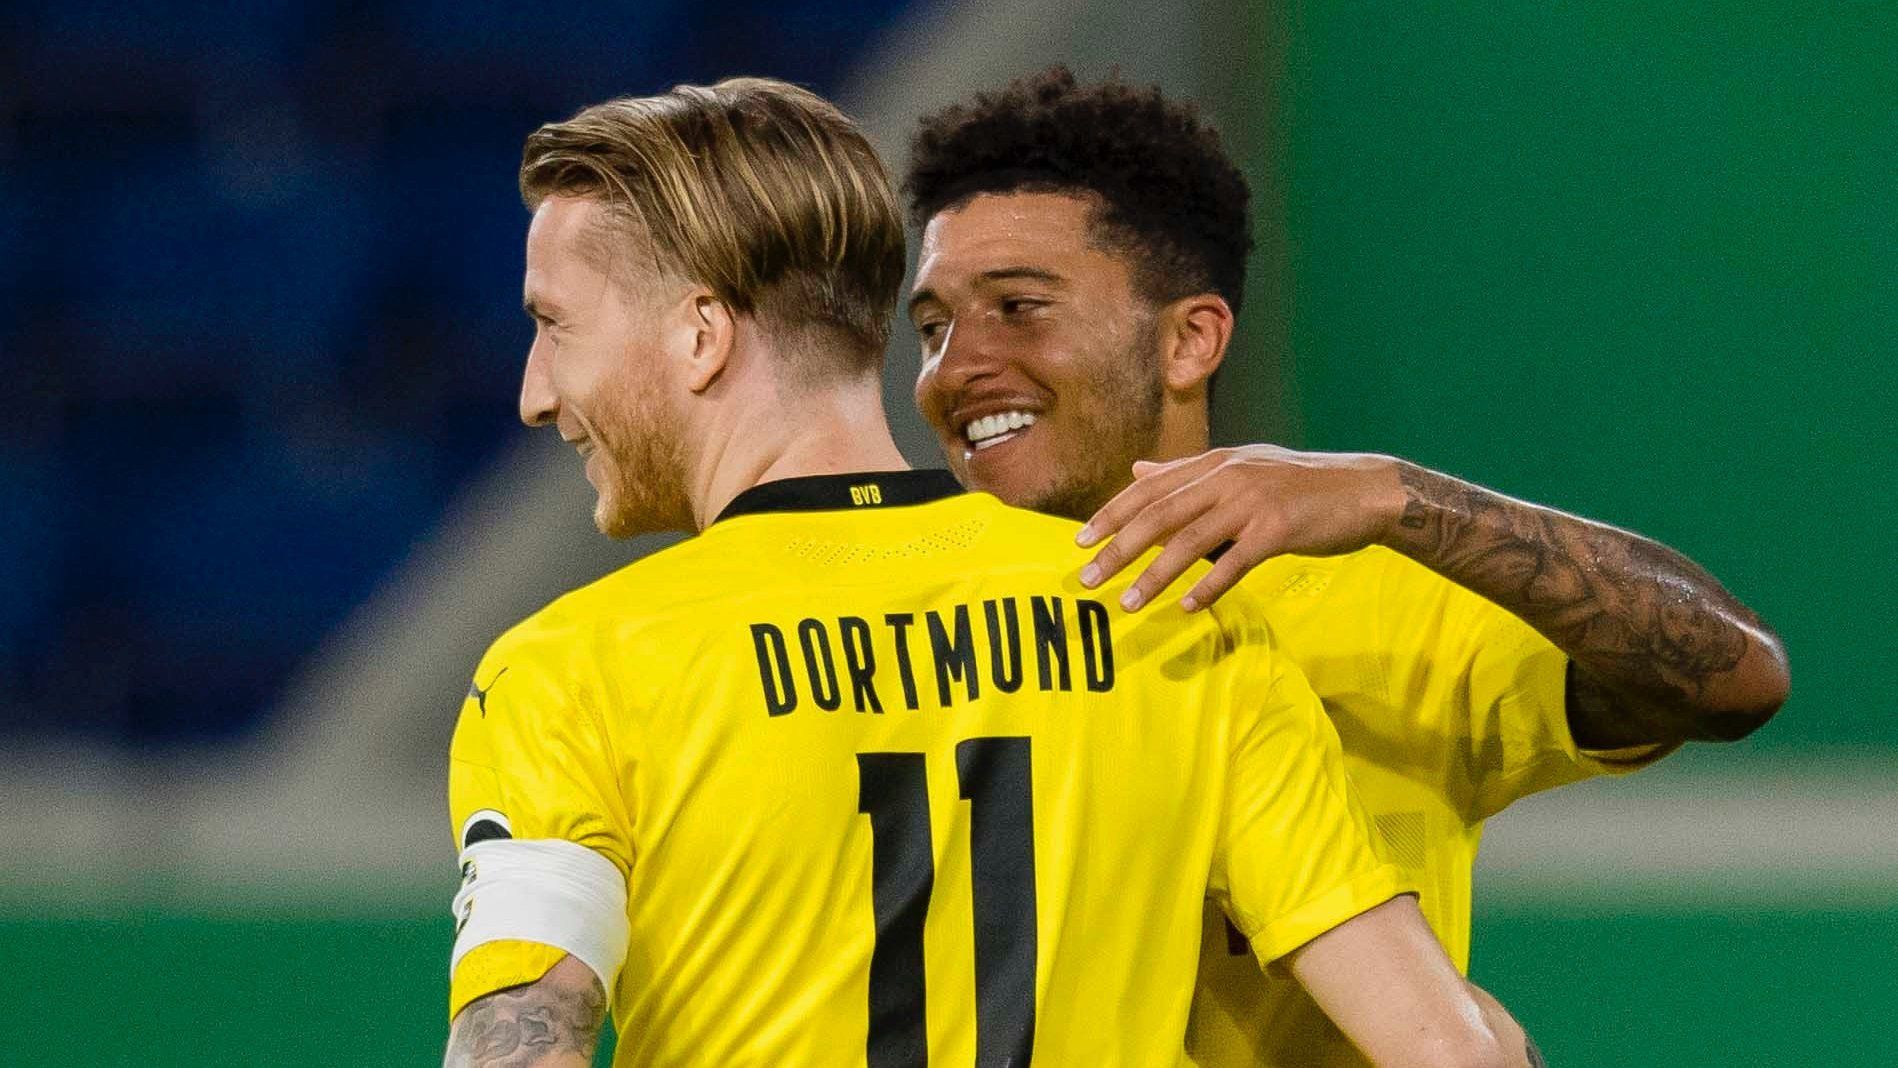 Боруссия Дортмунд — Байер прогноз 22 мая 2021: ставки и коэффициенты на матч Бундеслиги